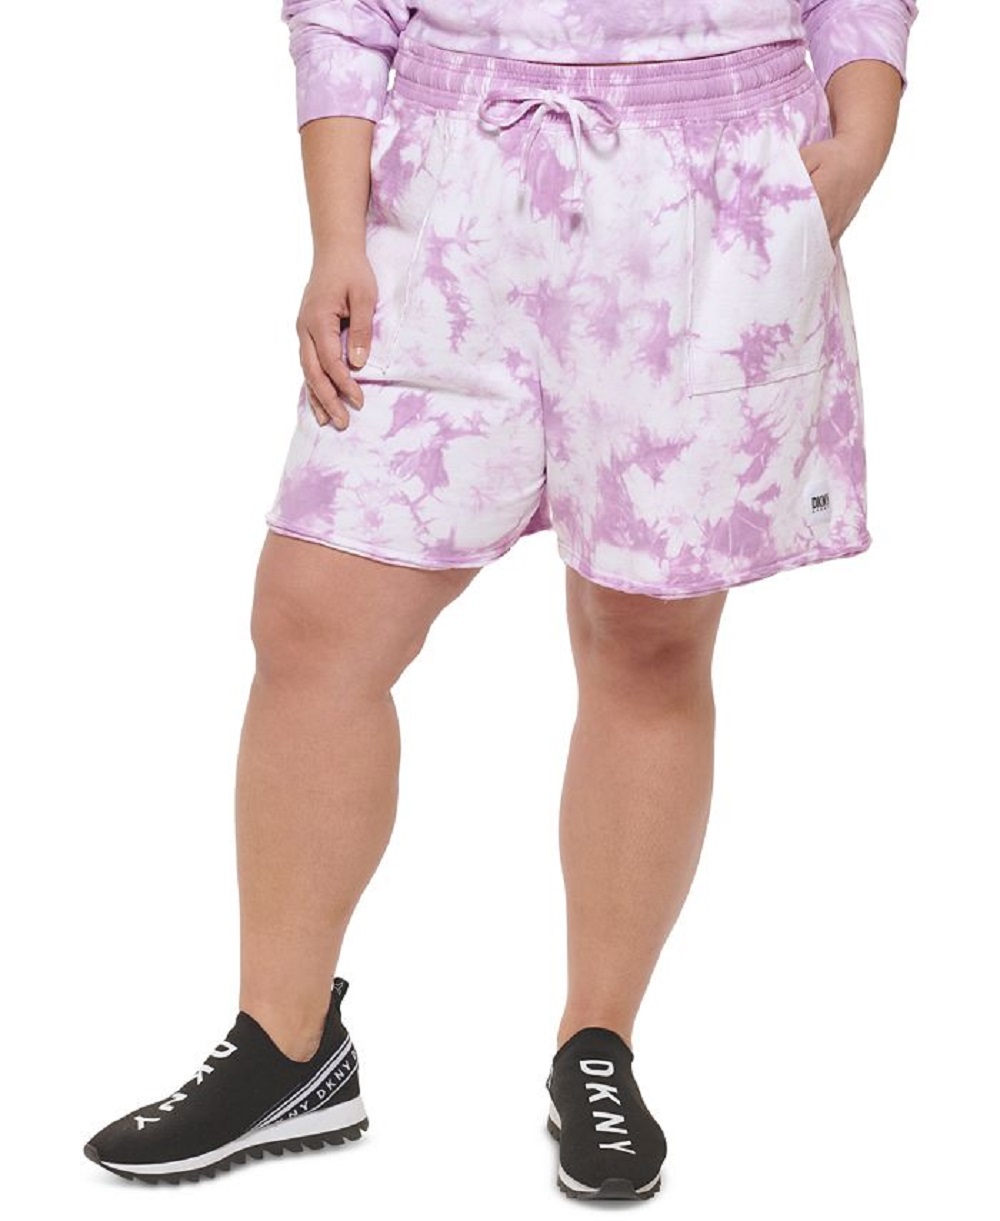 DKNY Women's Plus Printed Shorts Purple Size 1X